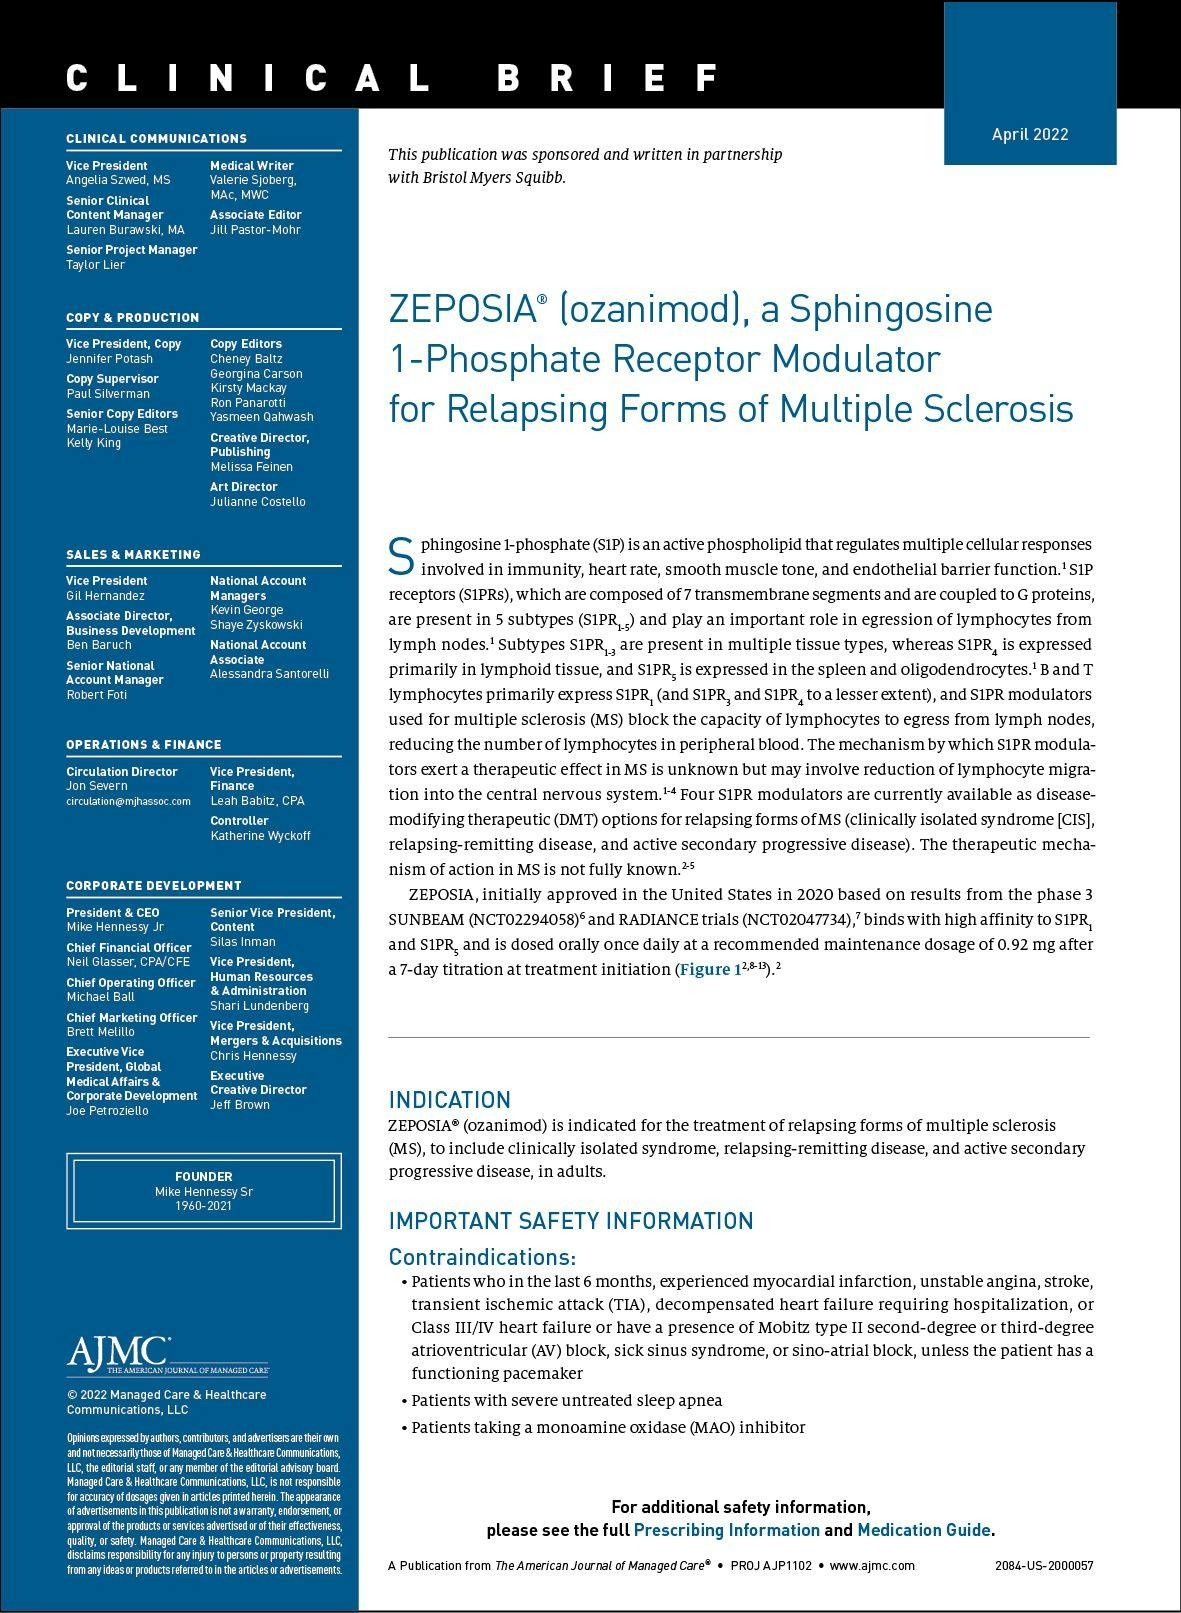 ZEPOSIA® (ozanimod), a Sphingosine 1-Phosphate Receptor Modulator for Relapsing Forms of Multiple Sclerosis